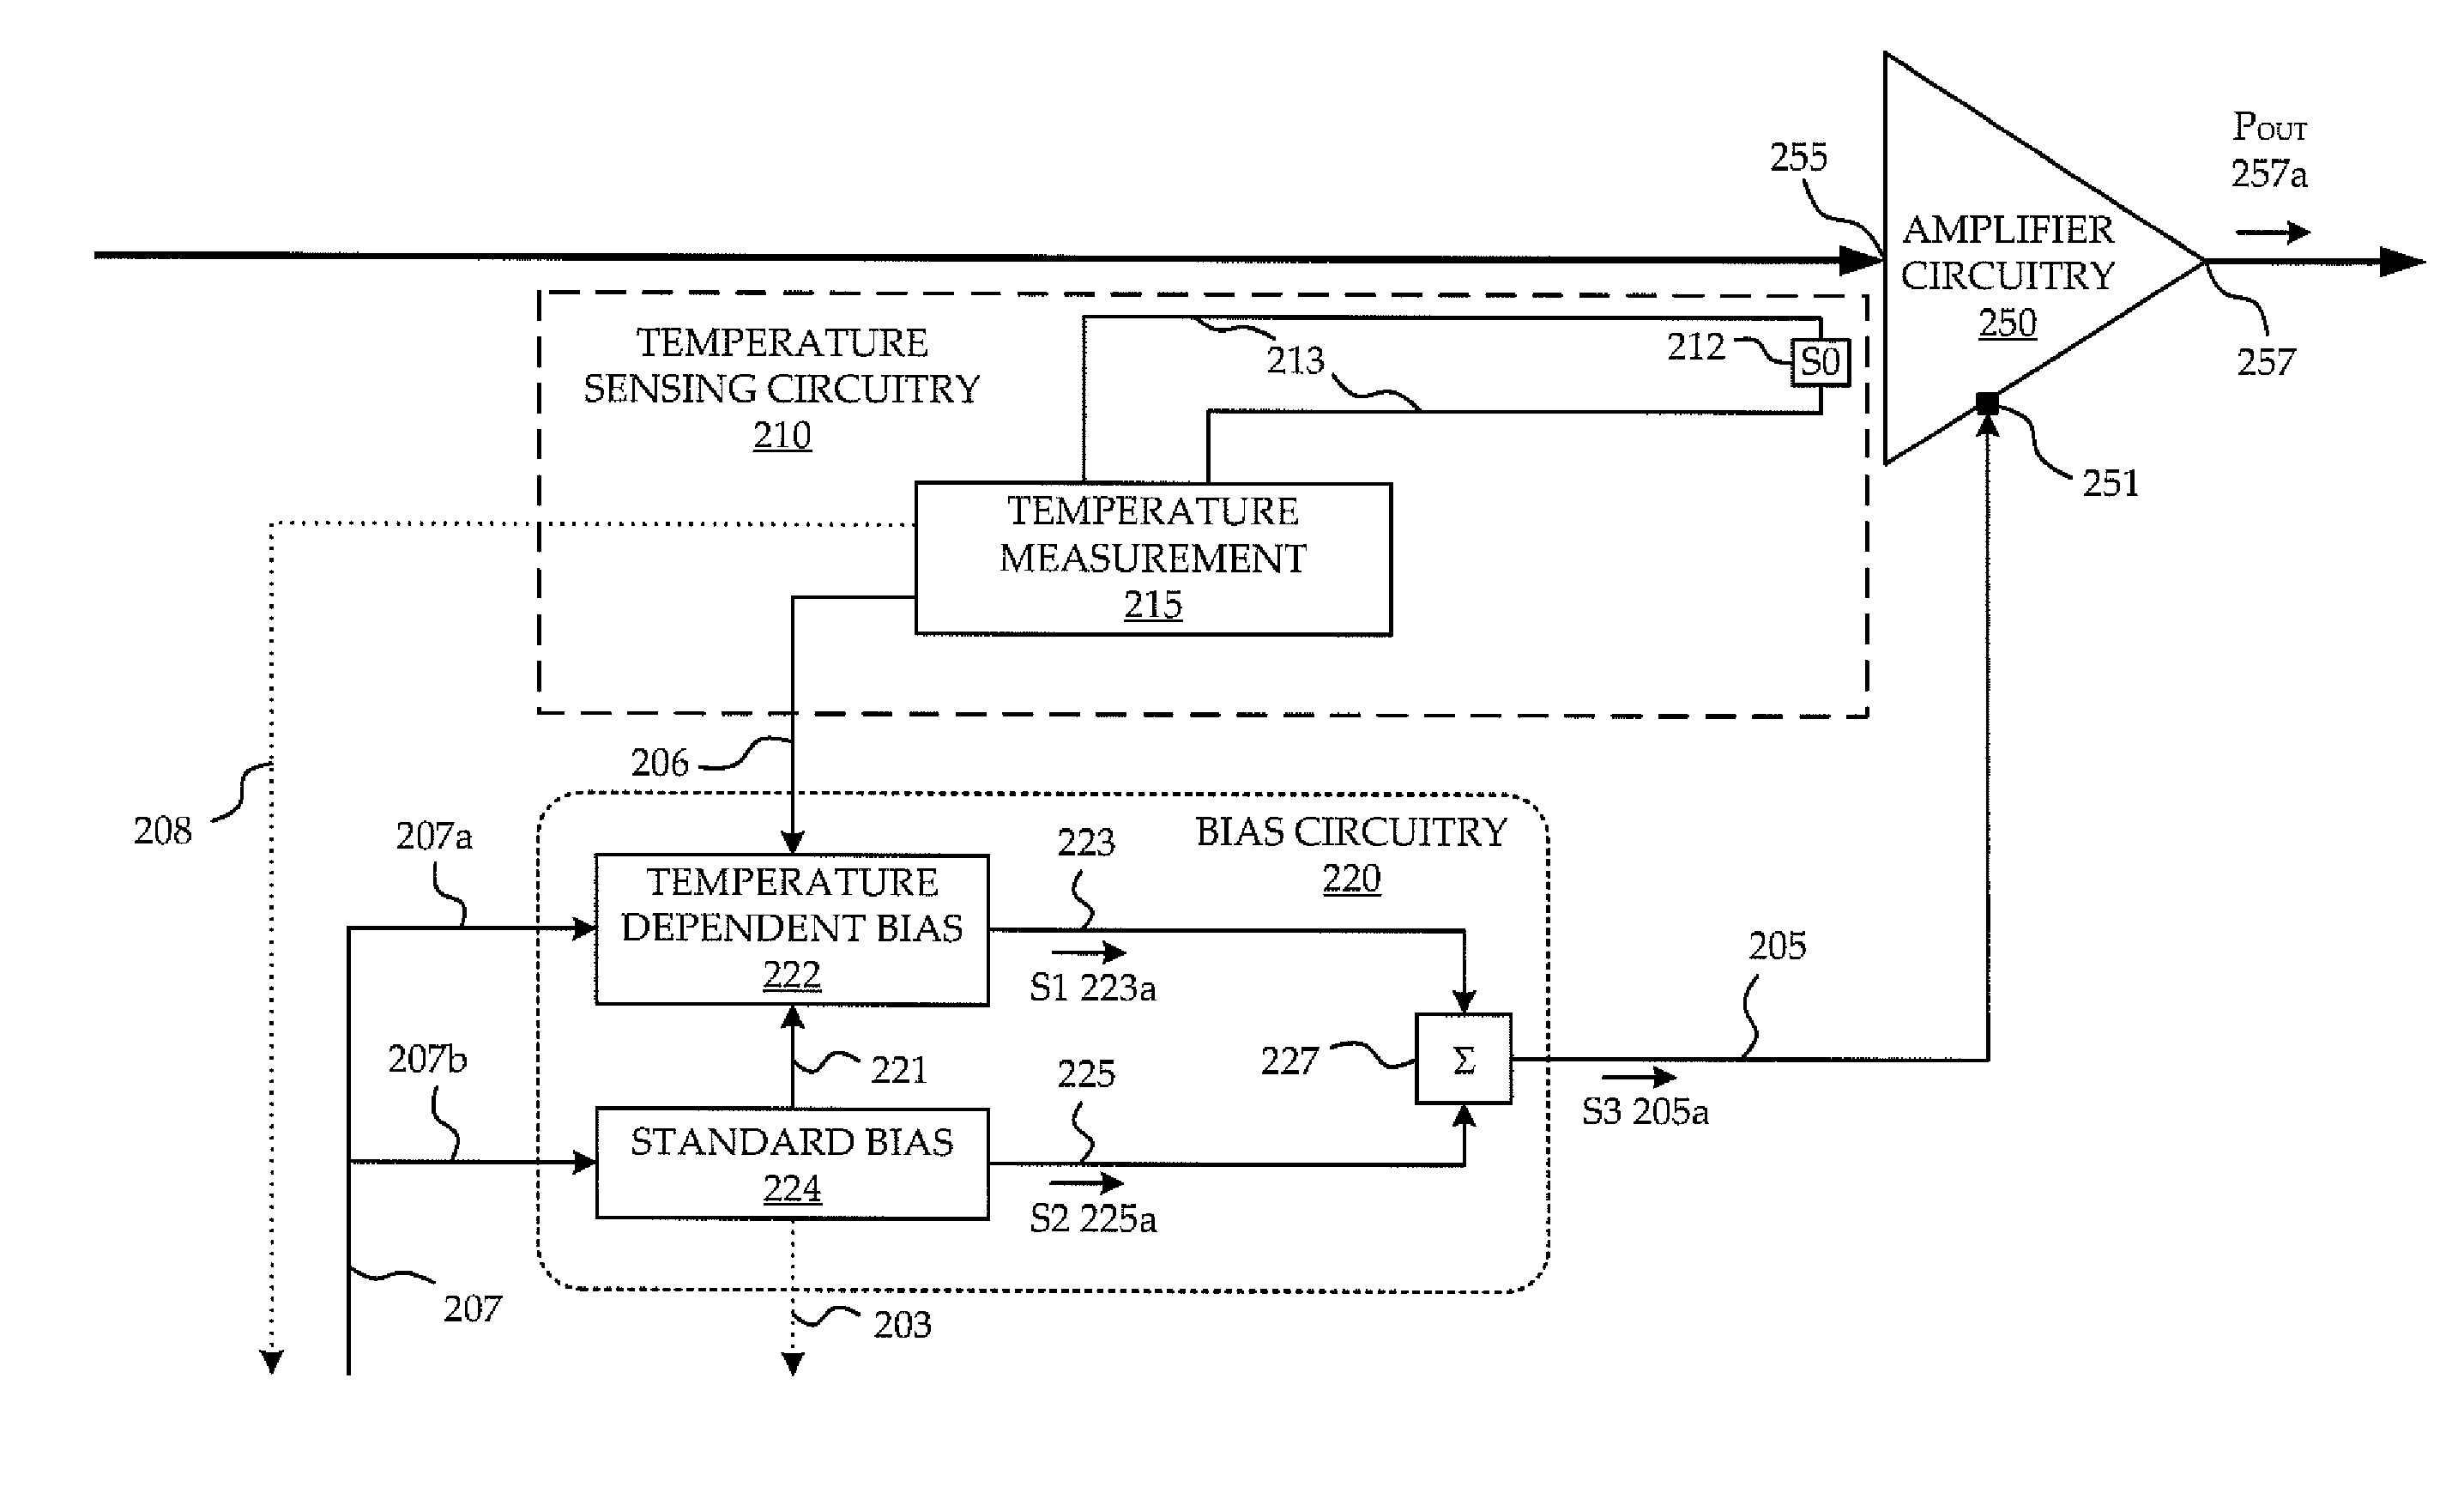 Circuit and method of temperature dependent power amplifier biasing